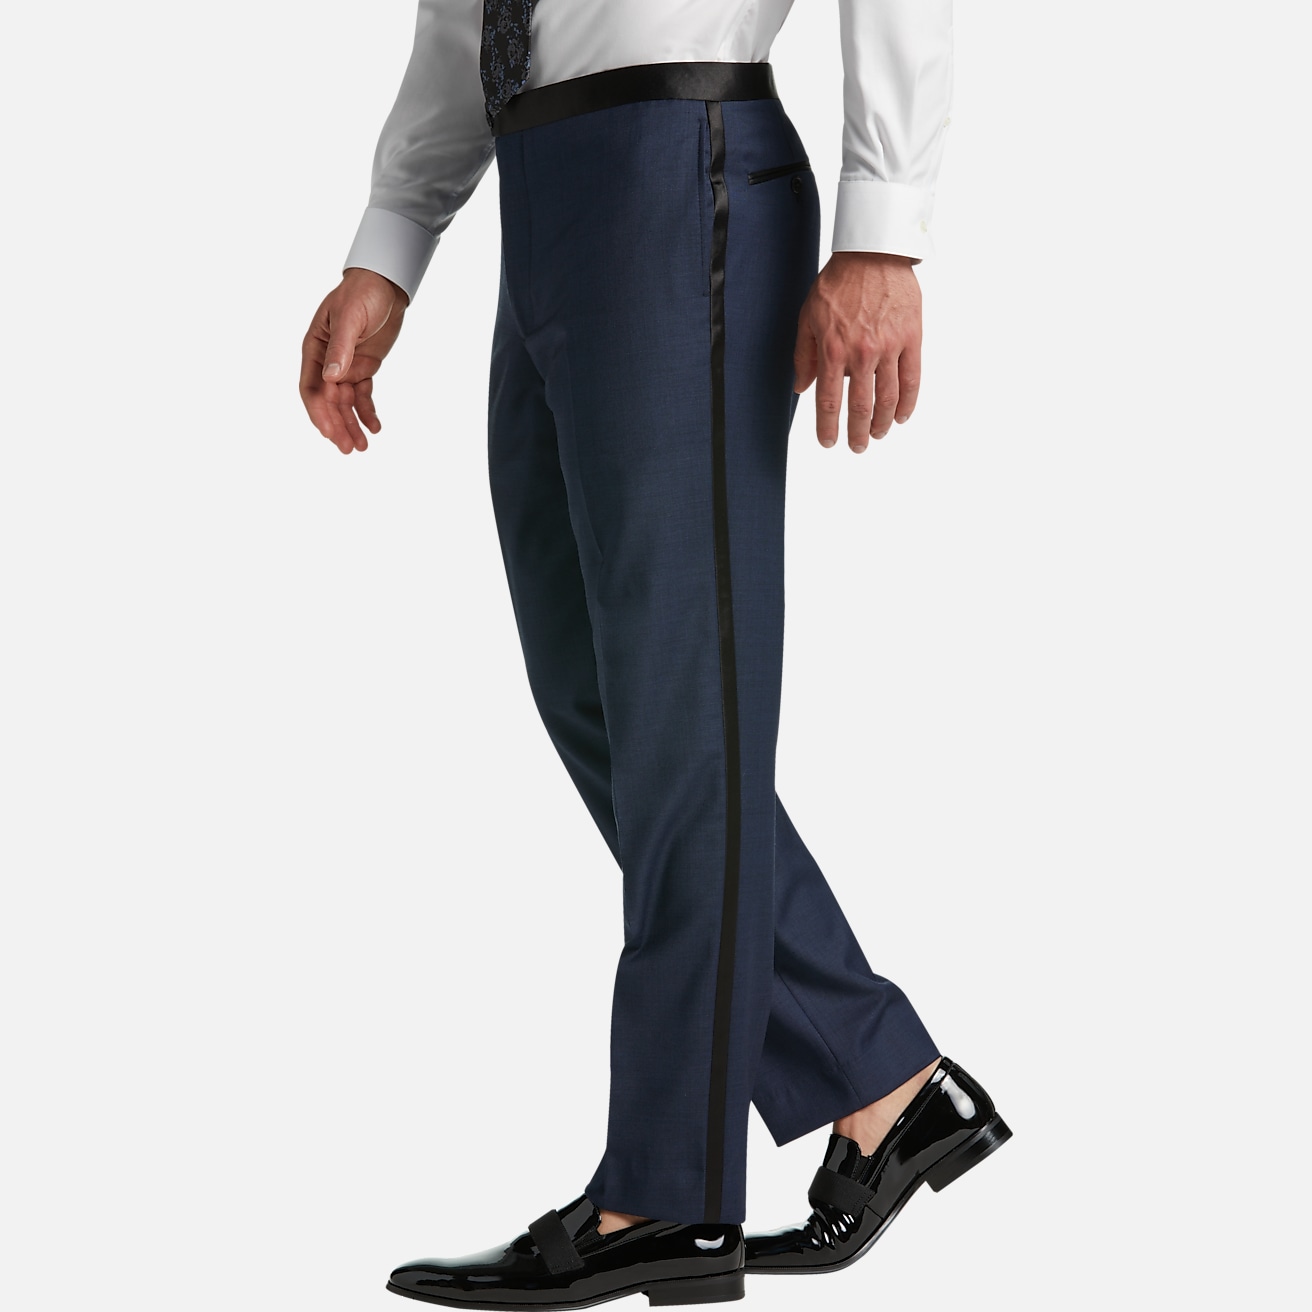 Pronto Uomo Platinum Modern Fit Suit Separates Tuxedo Pants, All Clothing